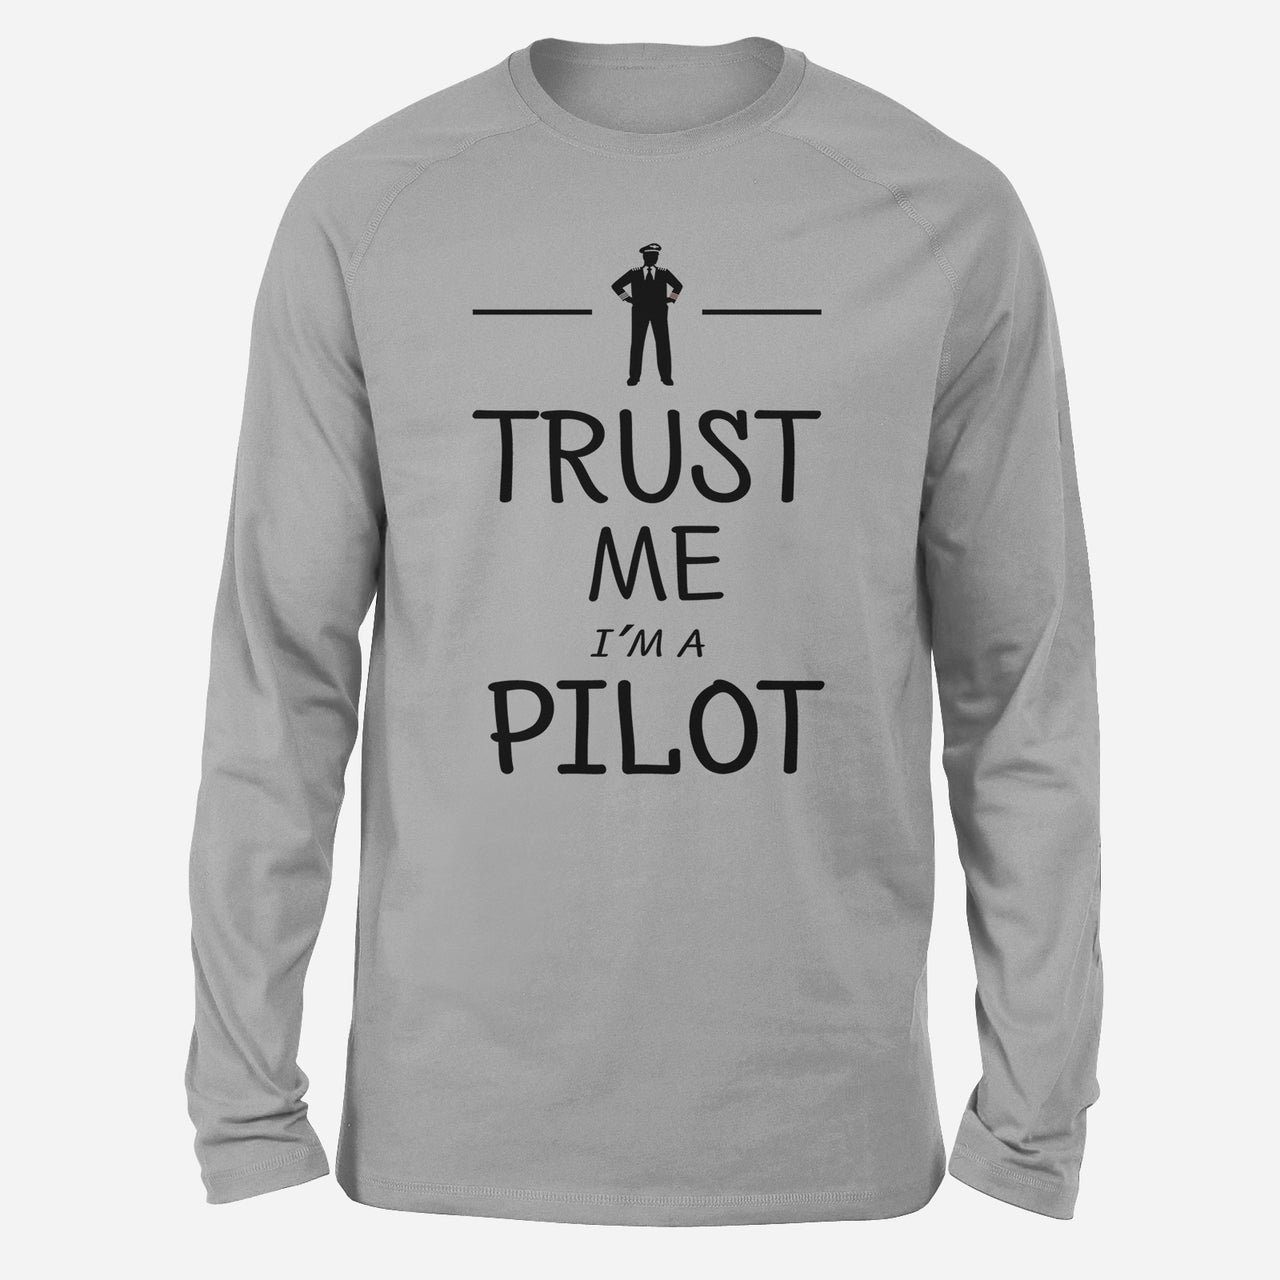 Trust Me I'm a Pilot Designed Long-Sleeve T-Shirts